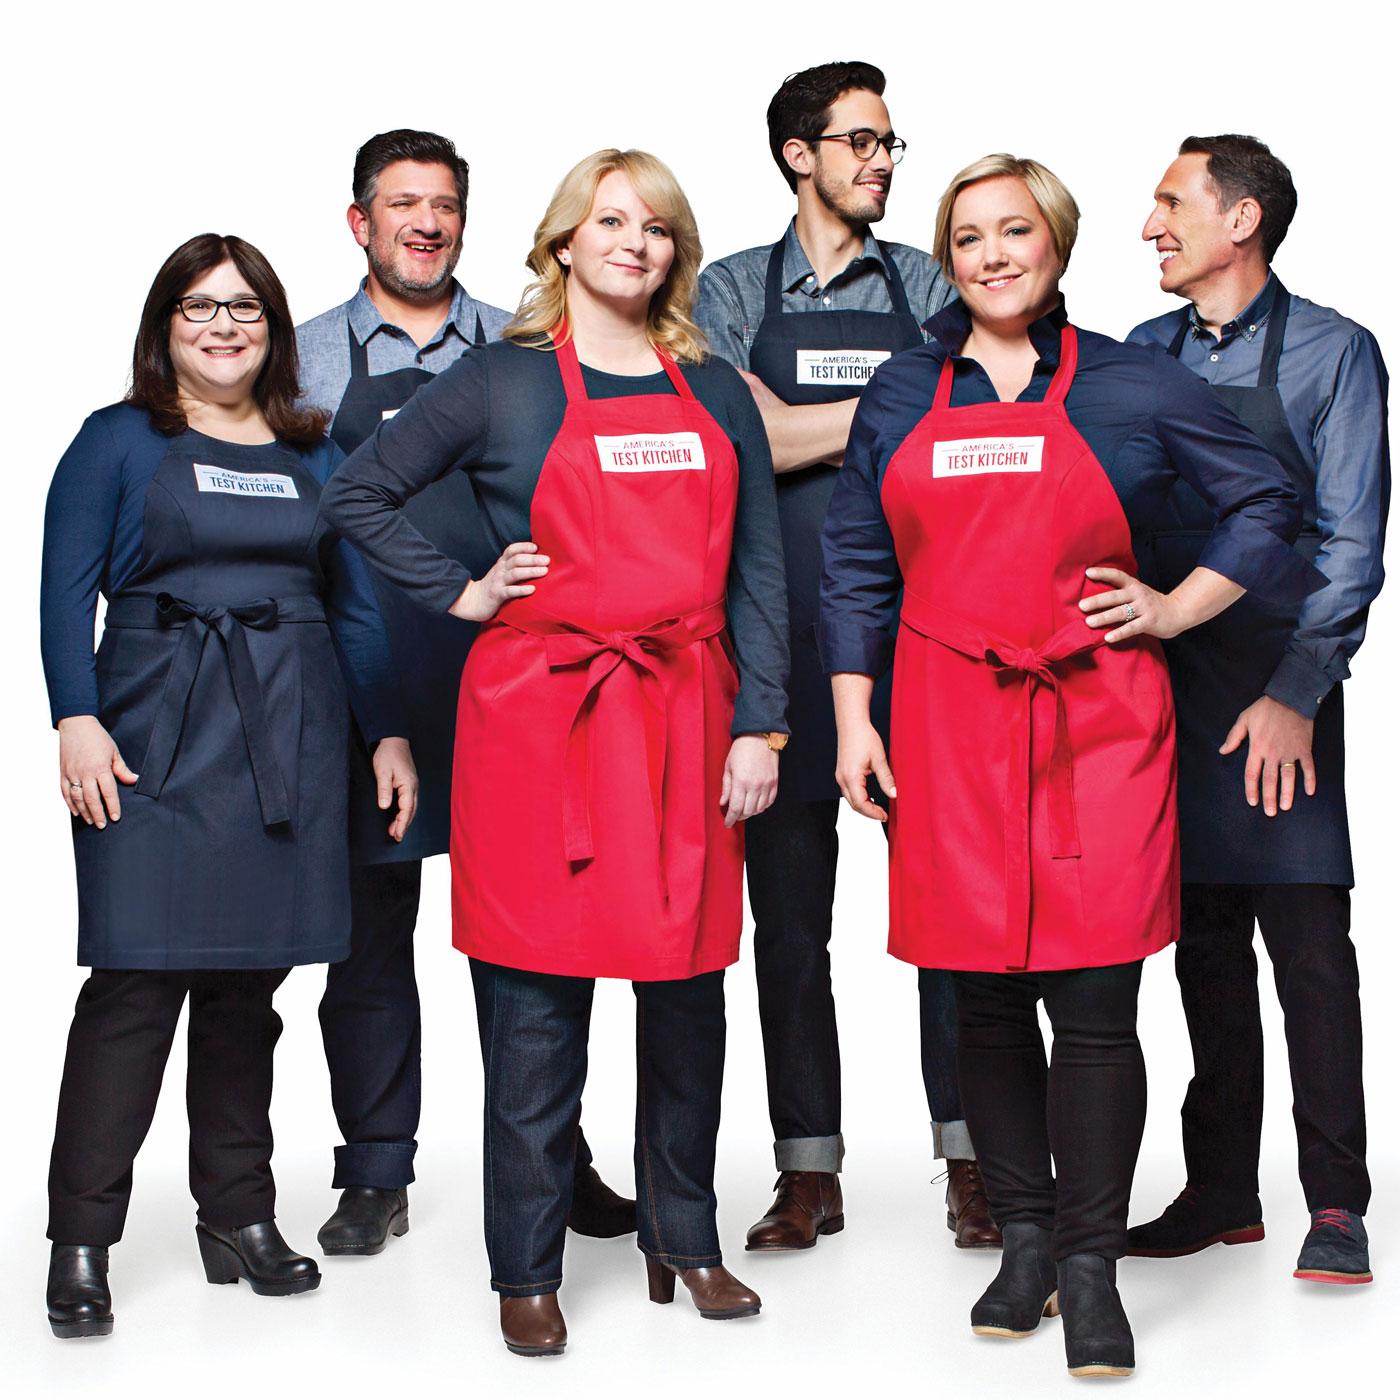 The America's Test Kitchen team. (Courtesy of America's Test Kitchen)